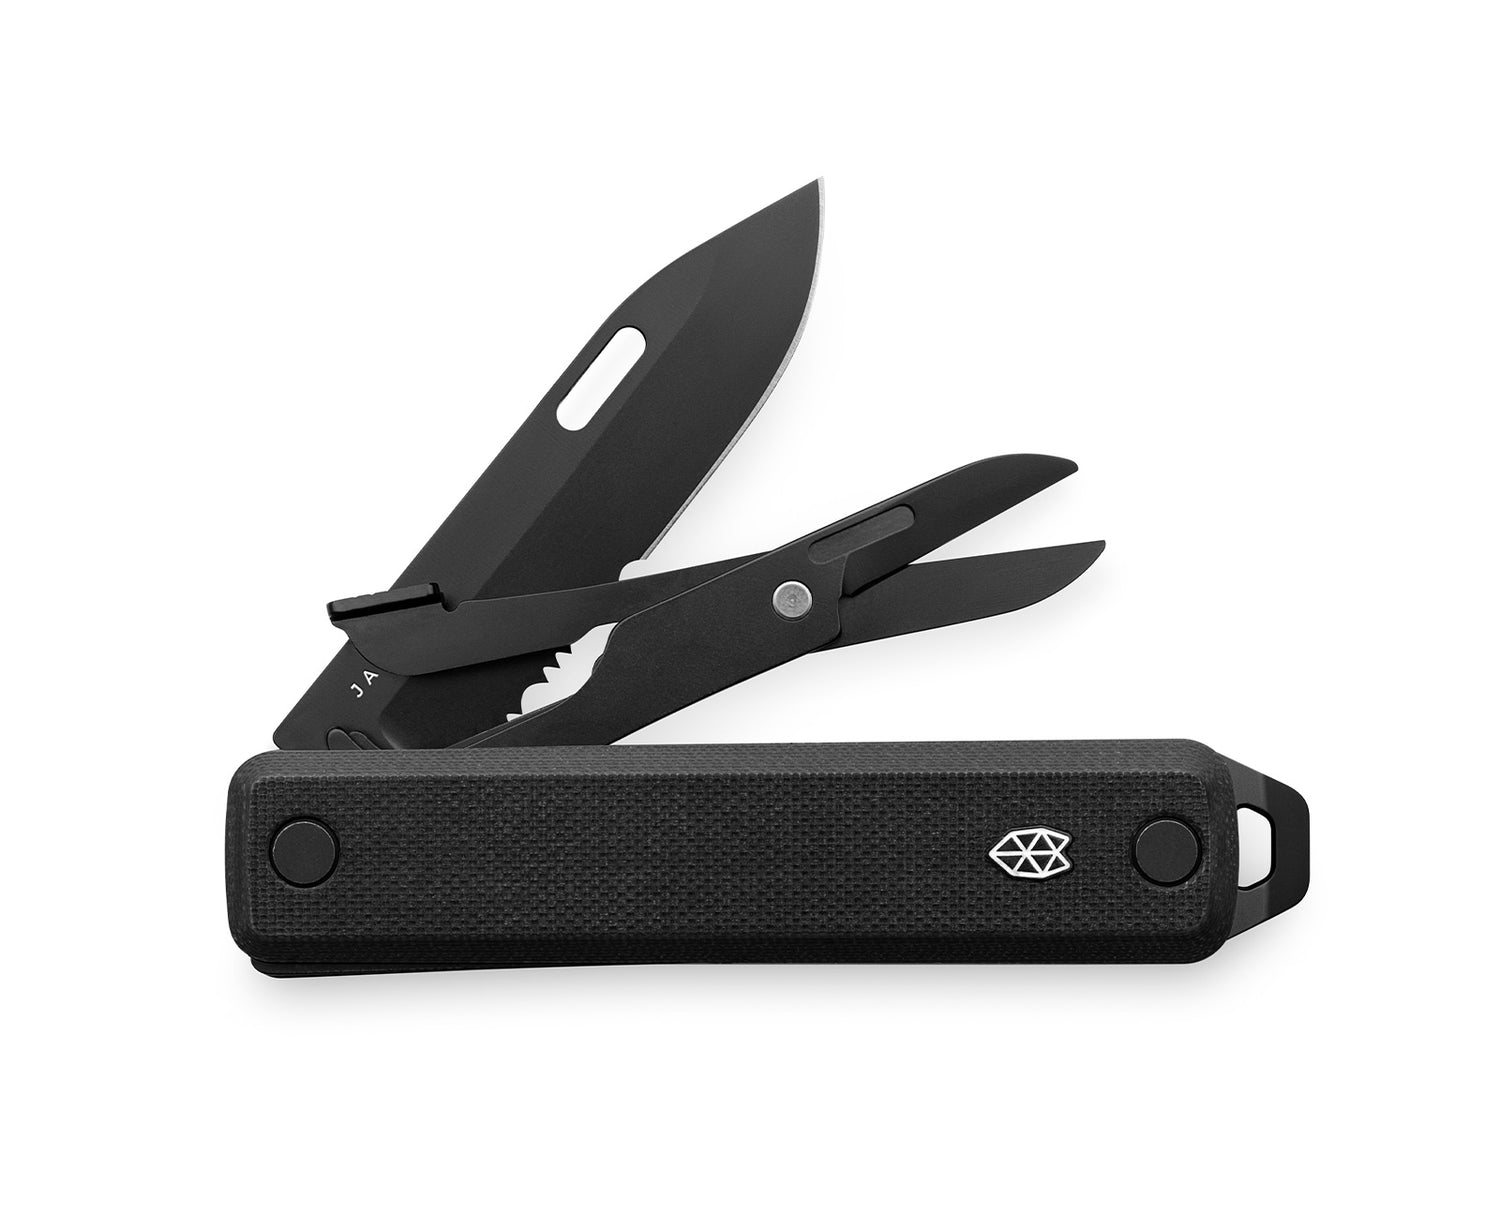 Knife Handles - Current Inc